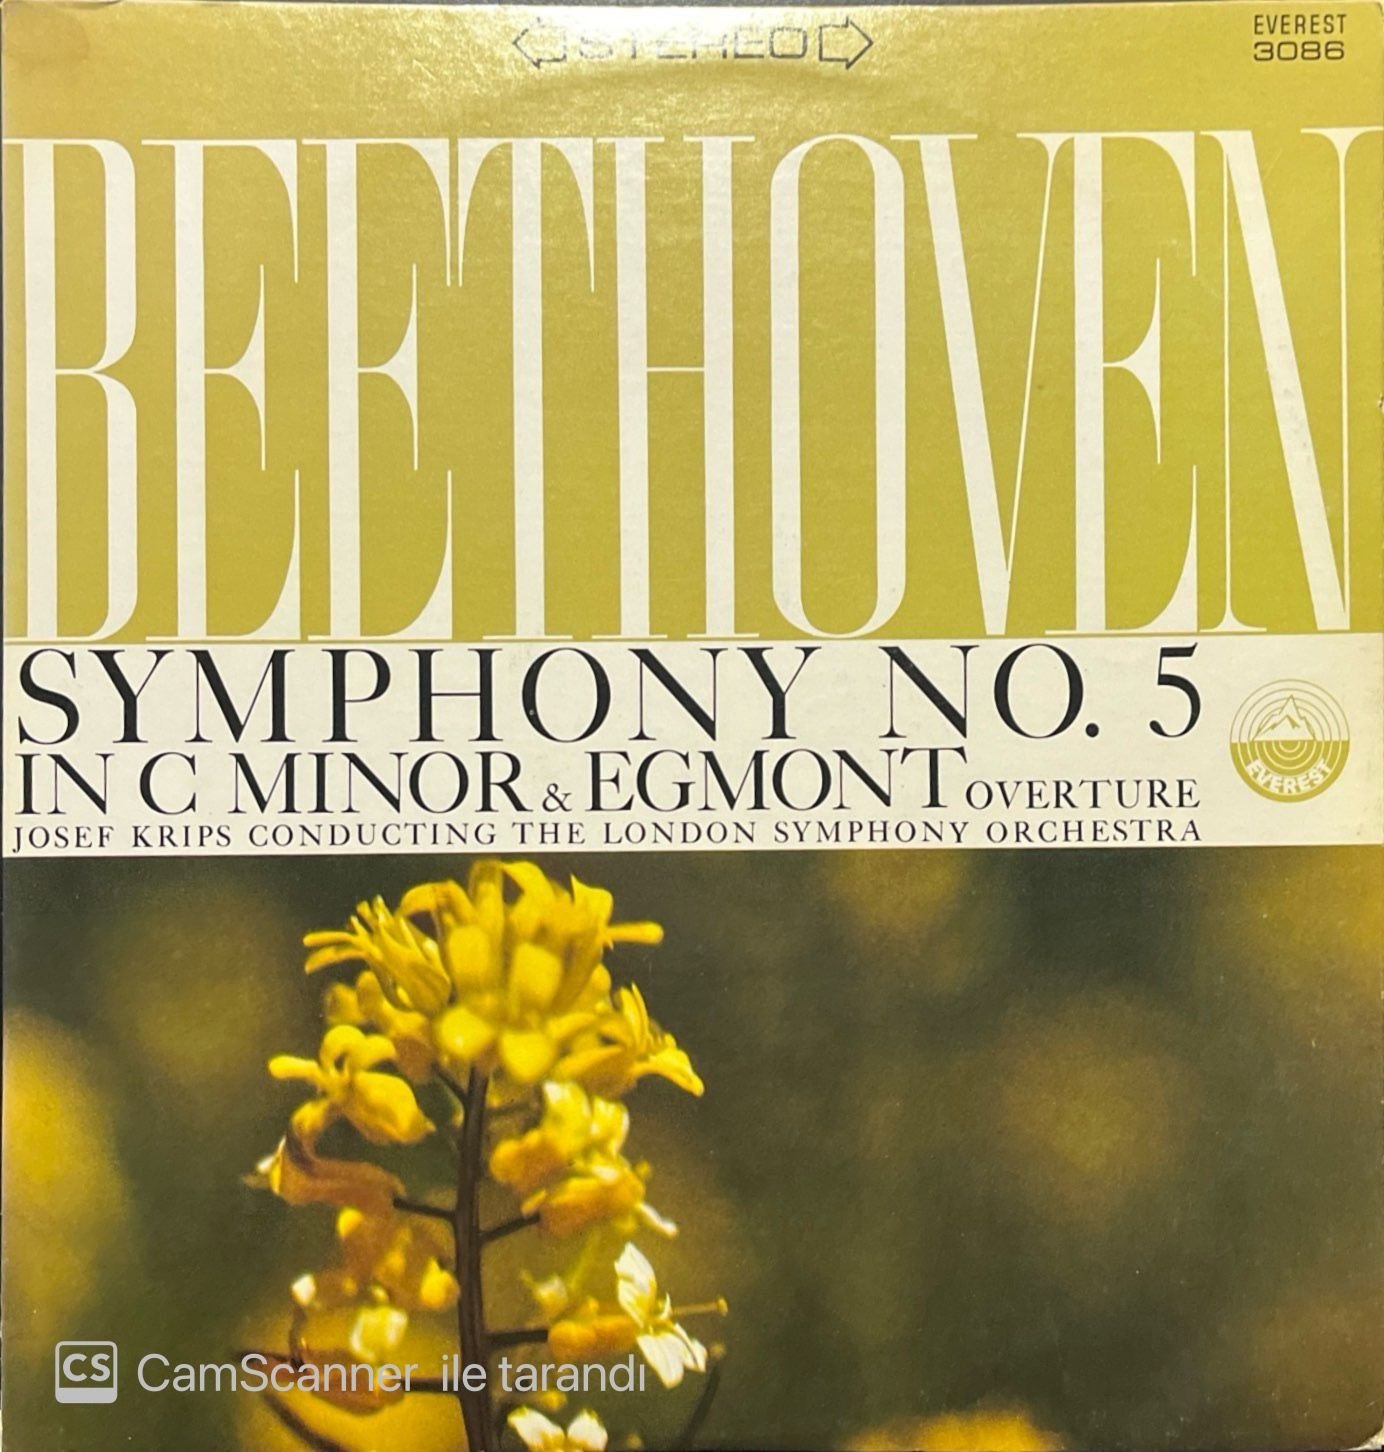 Beethoven Symphonie No.5 LP Plak